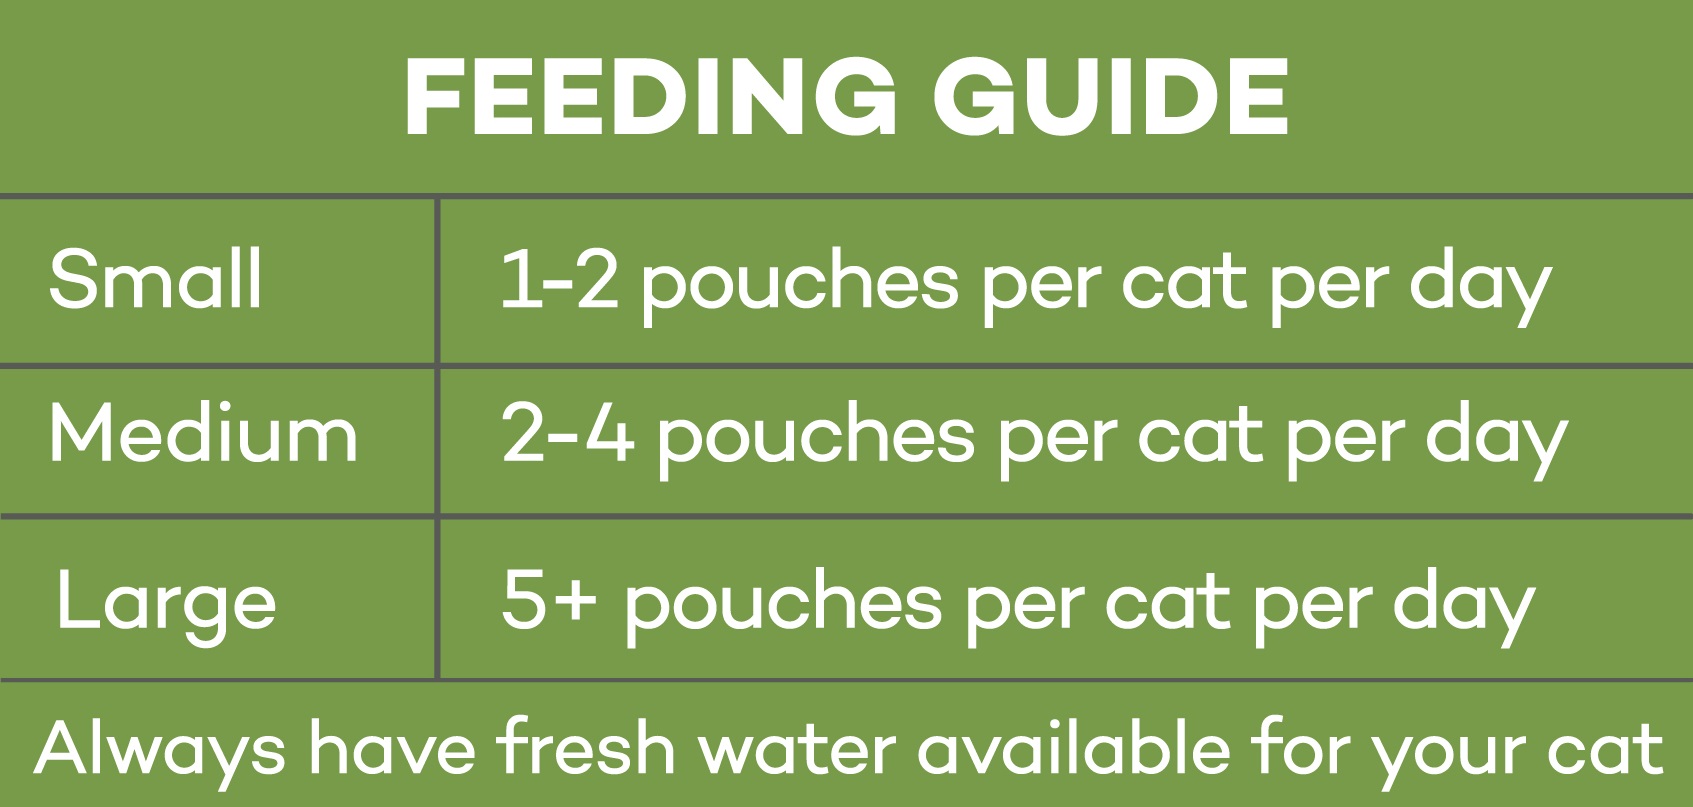 Feeding guide table forLokuno Cat No Grain With Chicken.